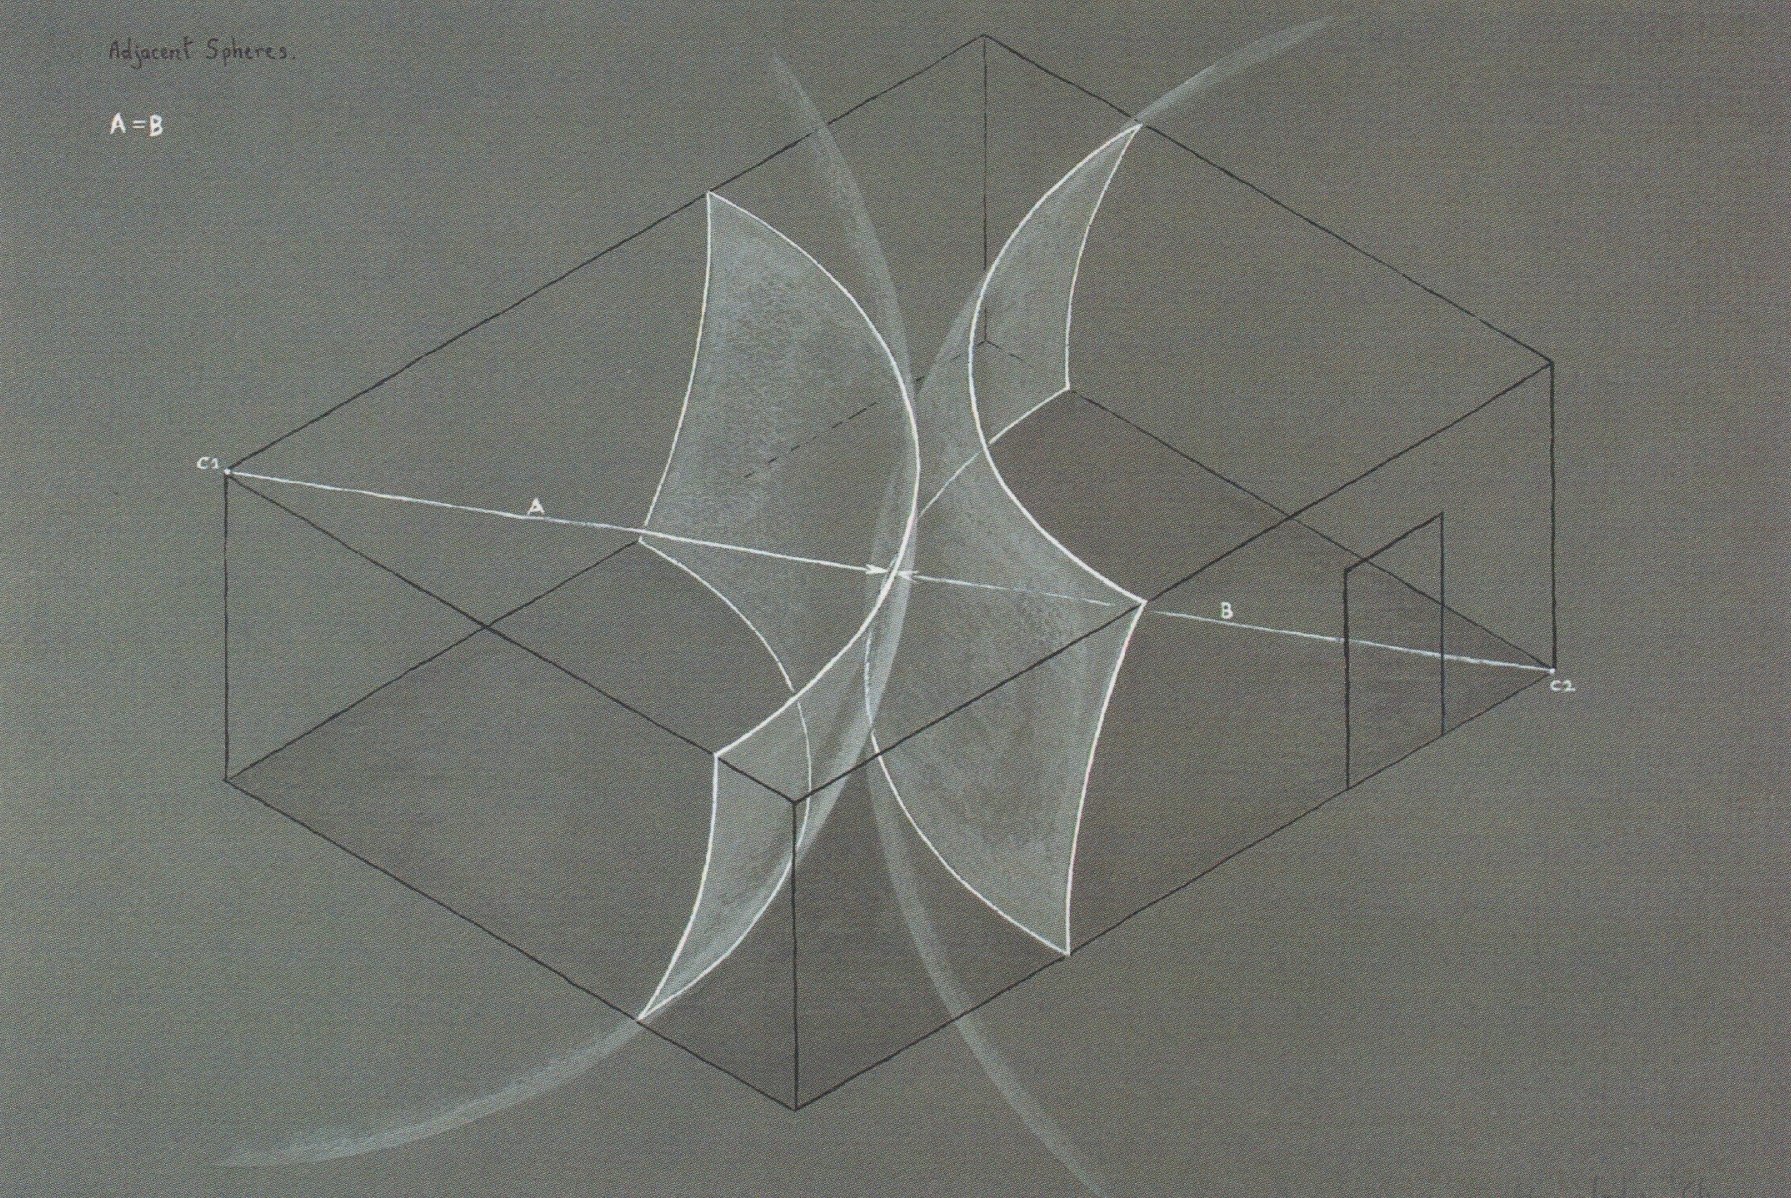 gary woodley, “adjacent spheres” (1988), drawing, 29 x 42 cm